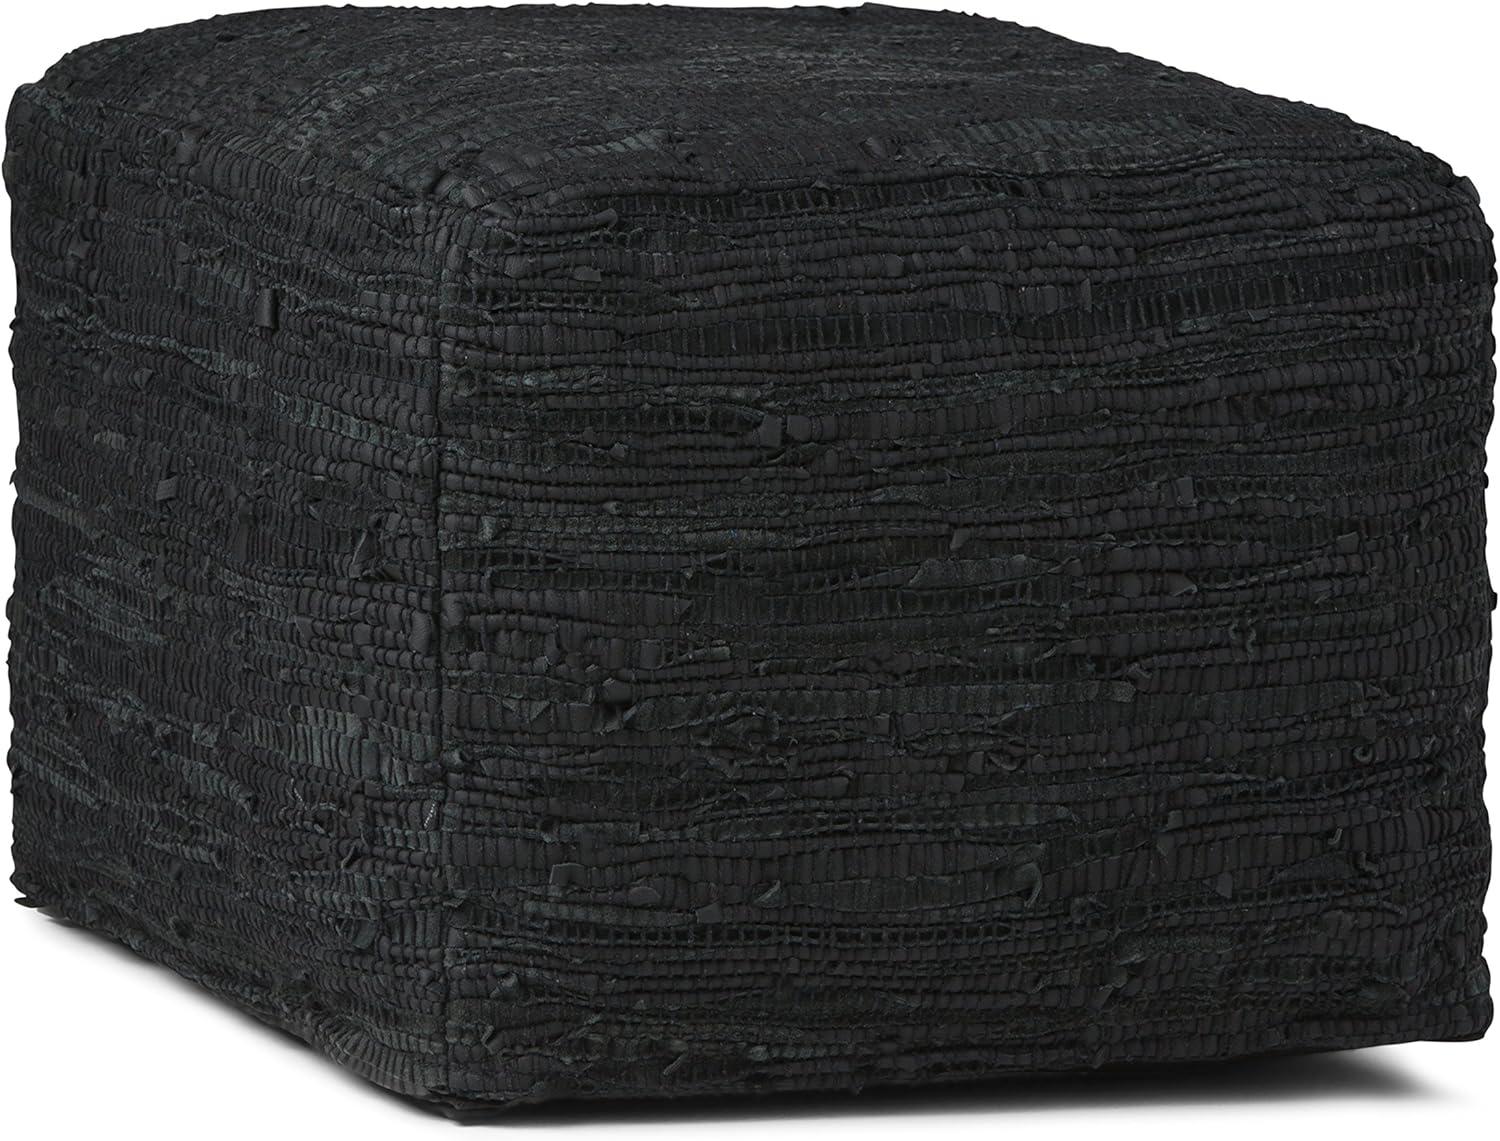 Fredrik Hand-Braided Black Leather Square Pouf Ottoman